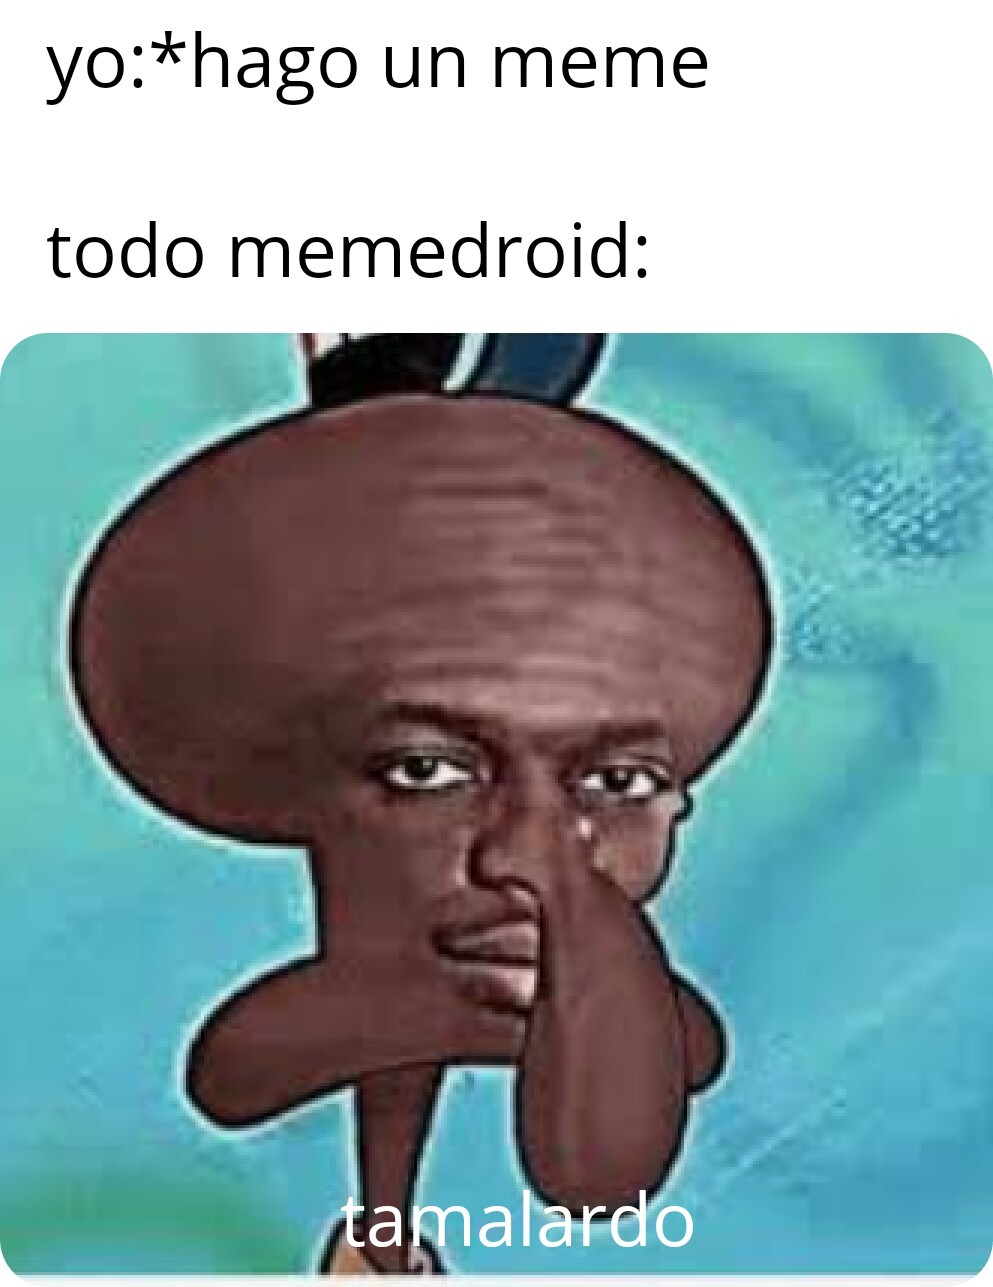 Calamardo peruano - meme